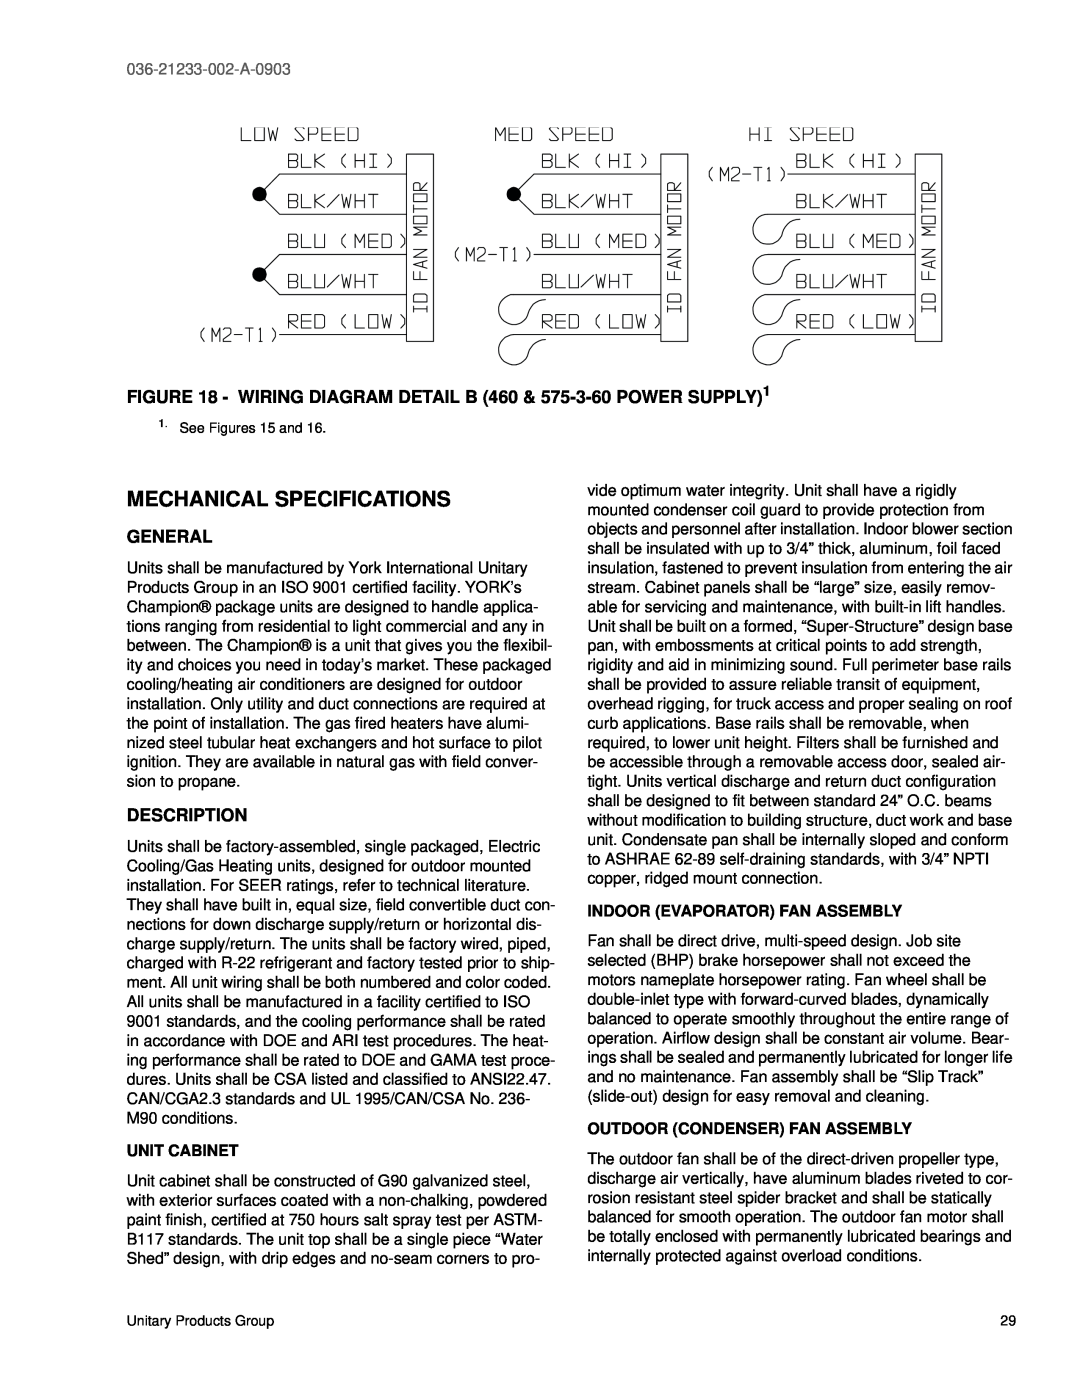 York DNH018 warranty Mechanical Specifications, General, Description, 036-21233-002-A-0903 